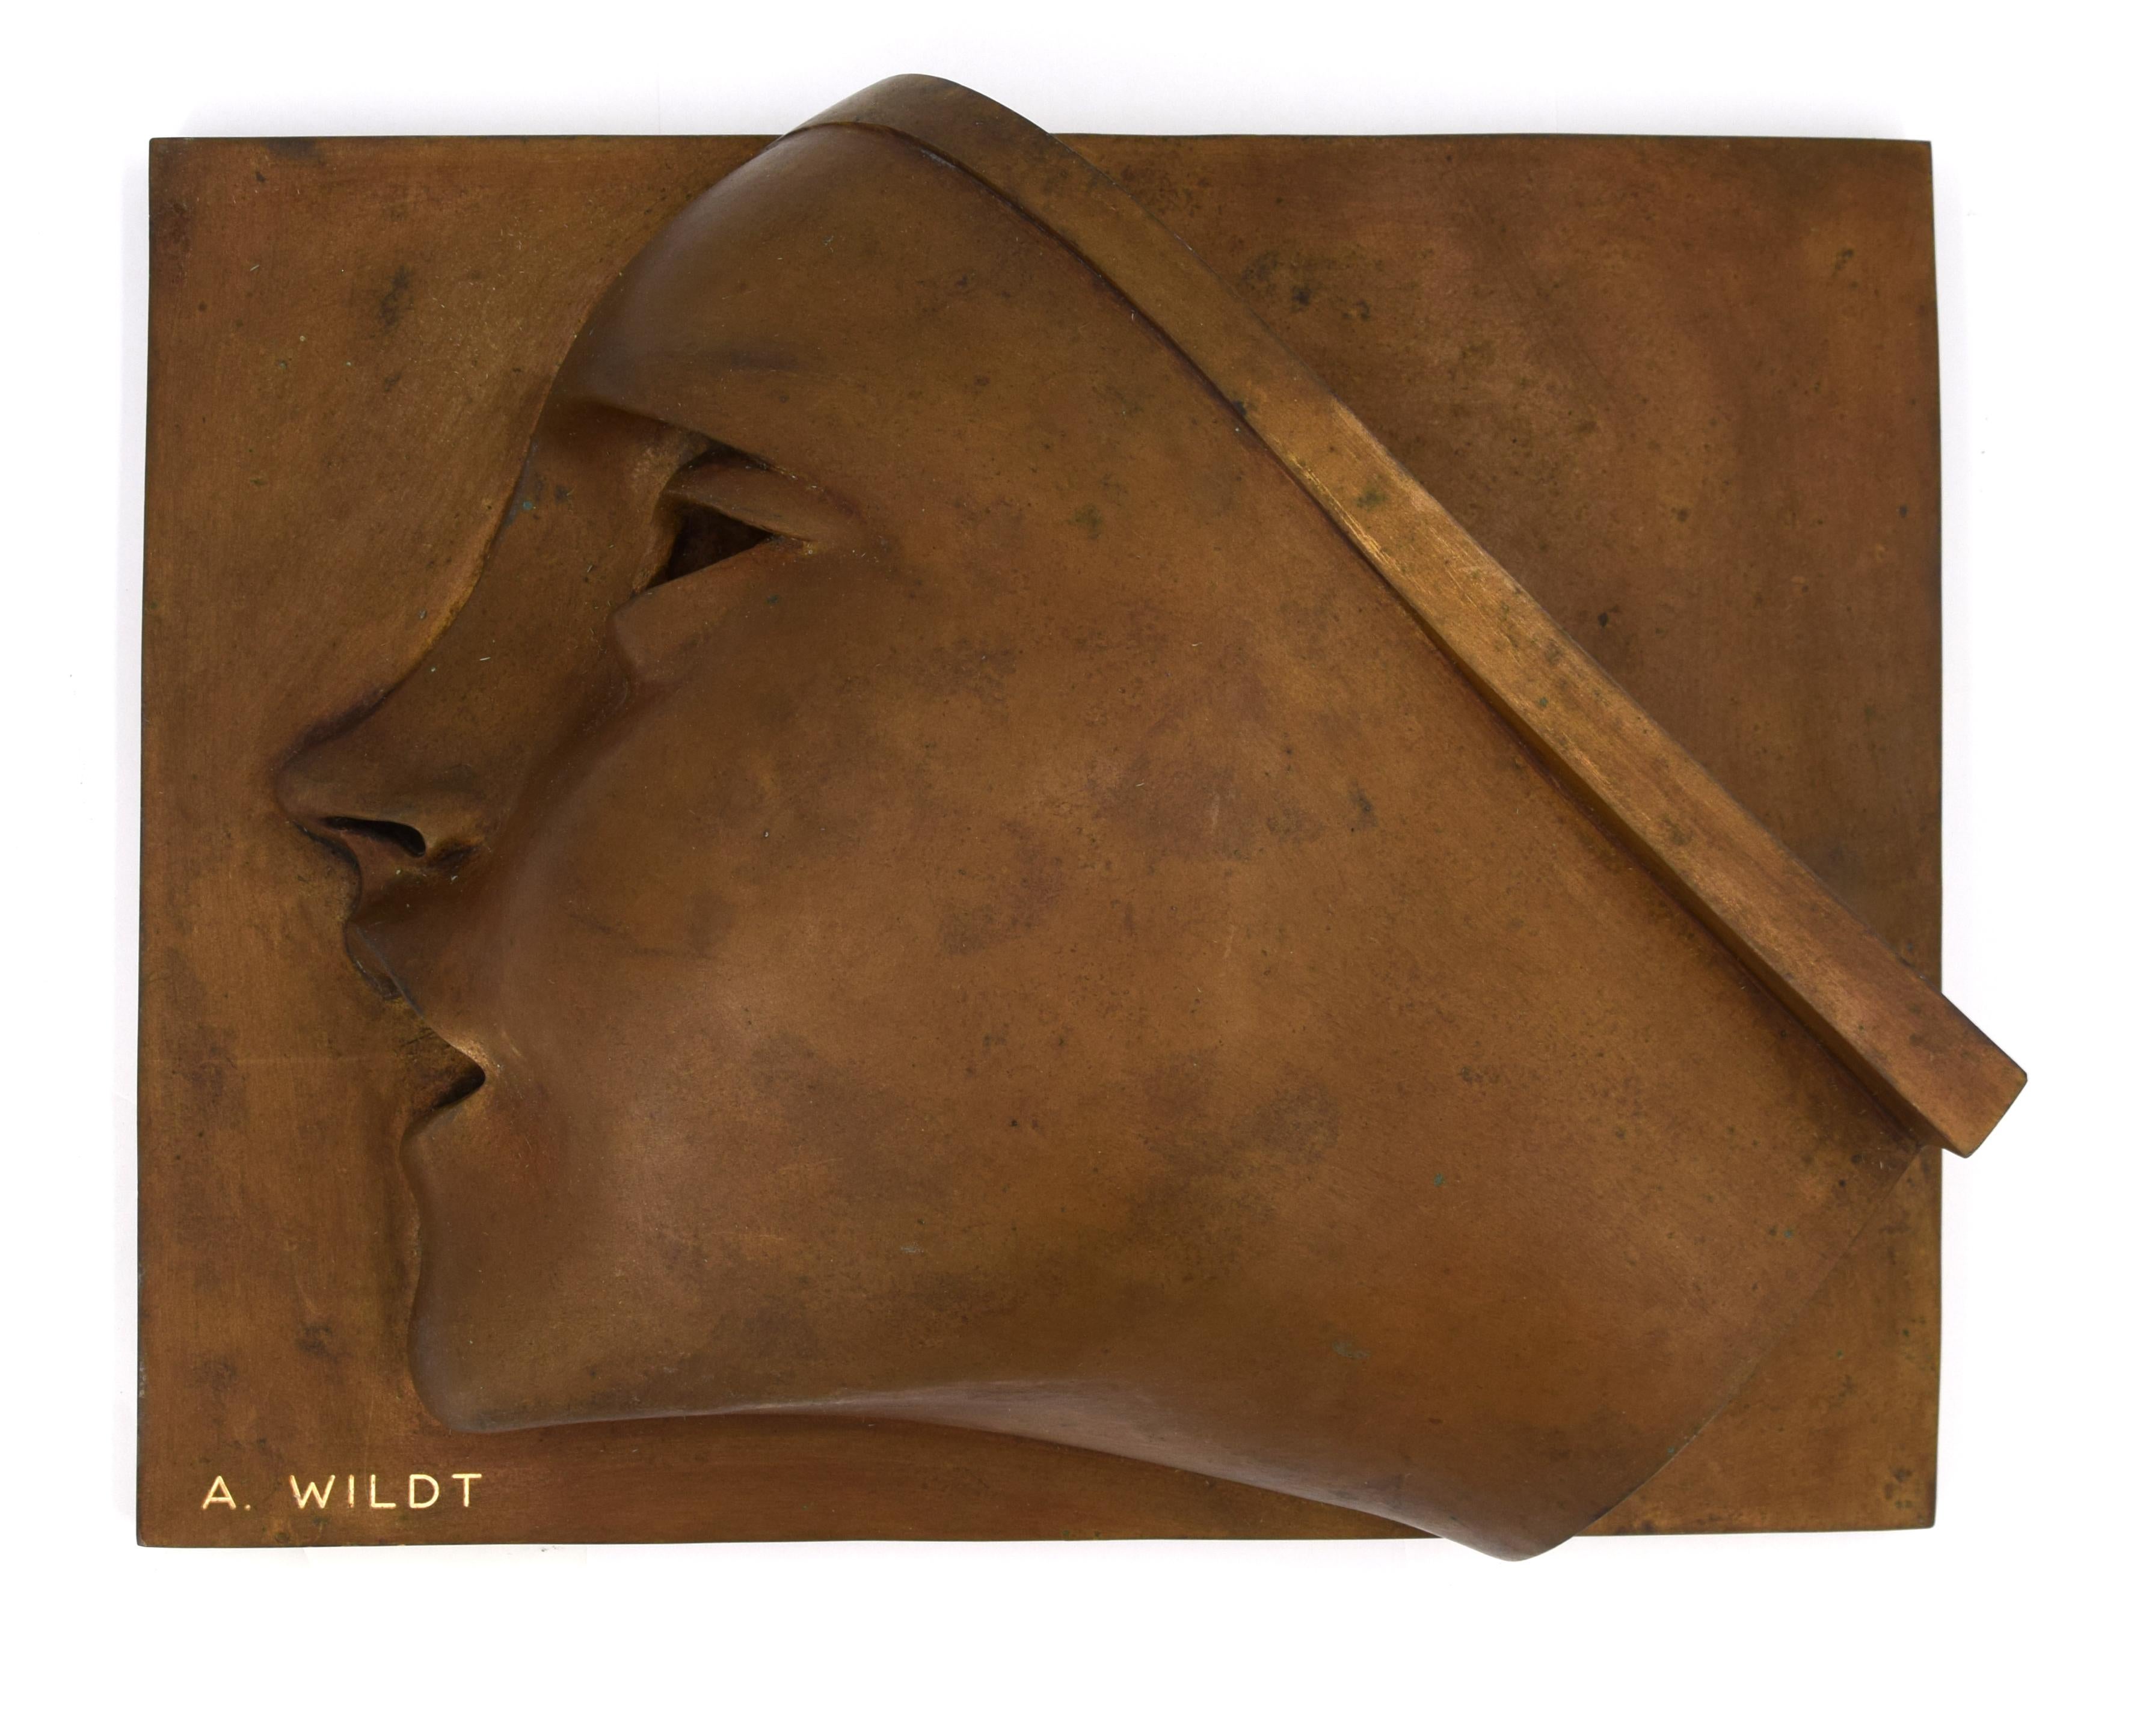 Adolfo Wildt Figurative Sculpture - Victory - Bronze Sculpture After A. Wildt - 1990